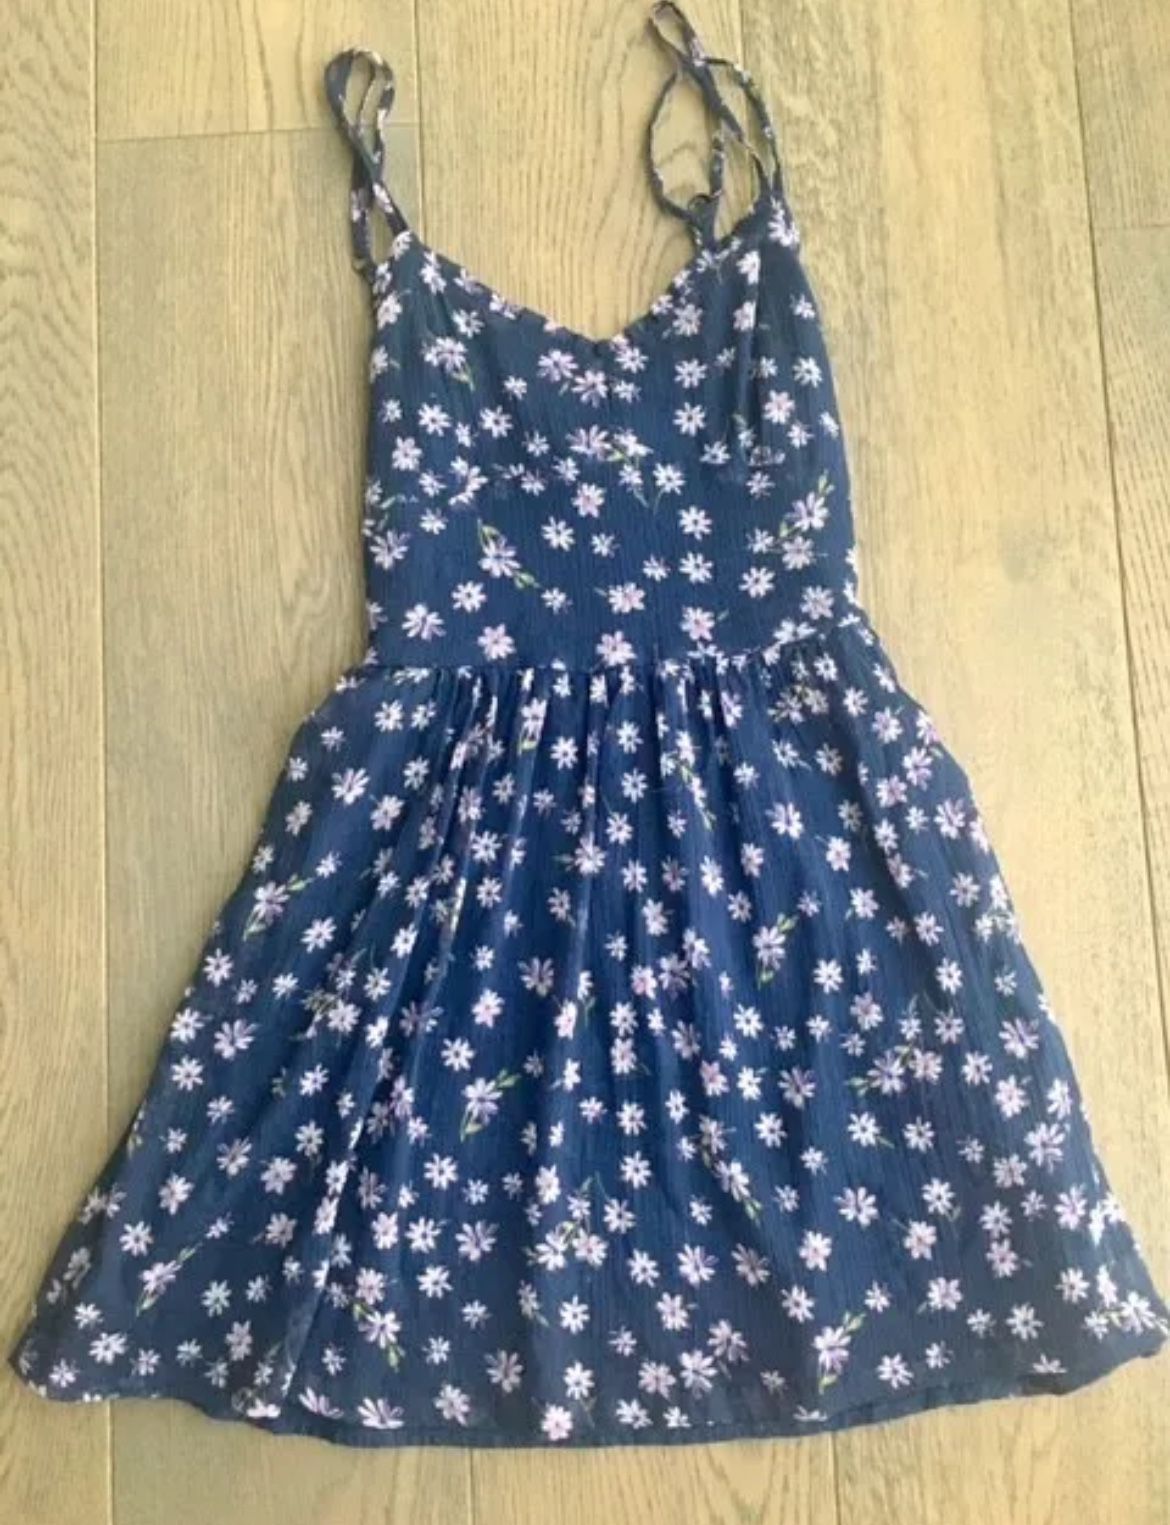 Abercrombie Kids Flower Blue Chiffon Dress - XL 